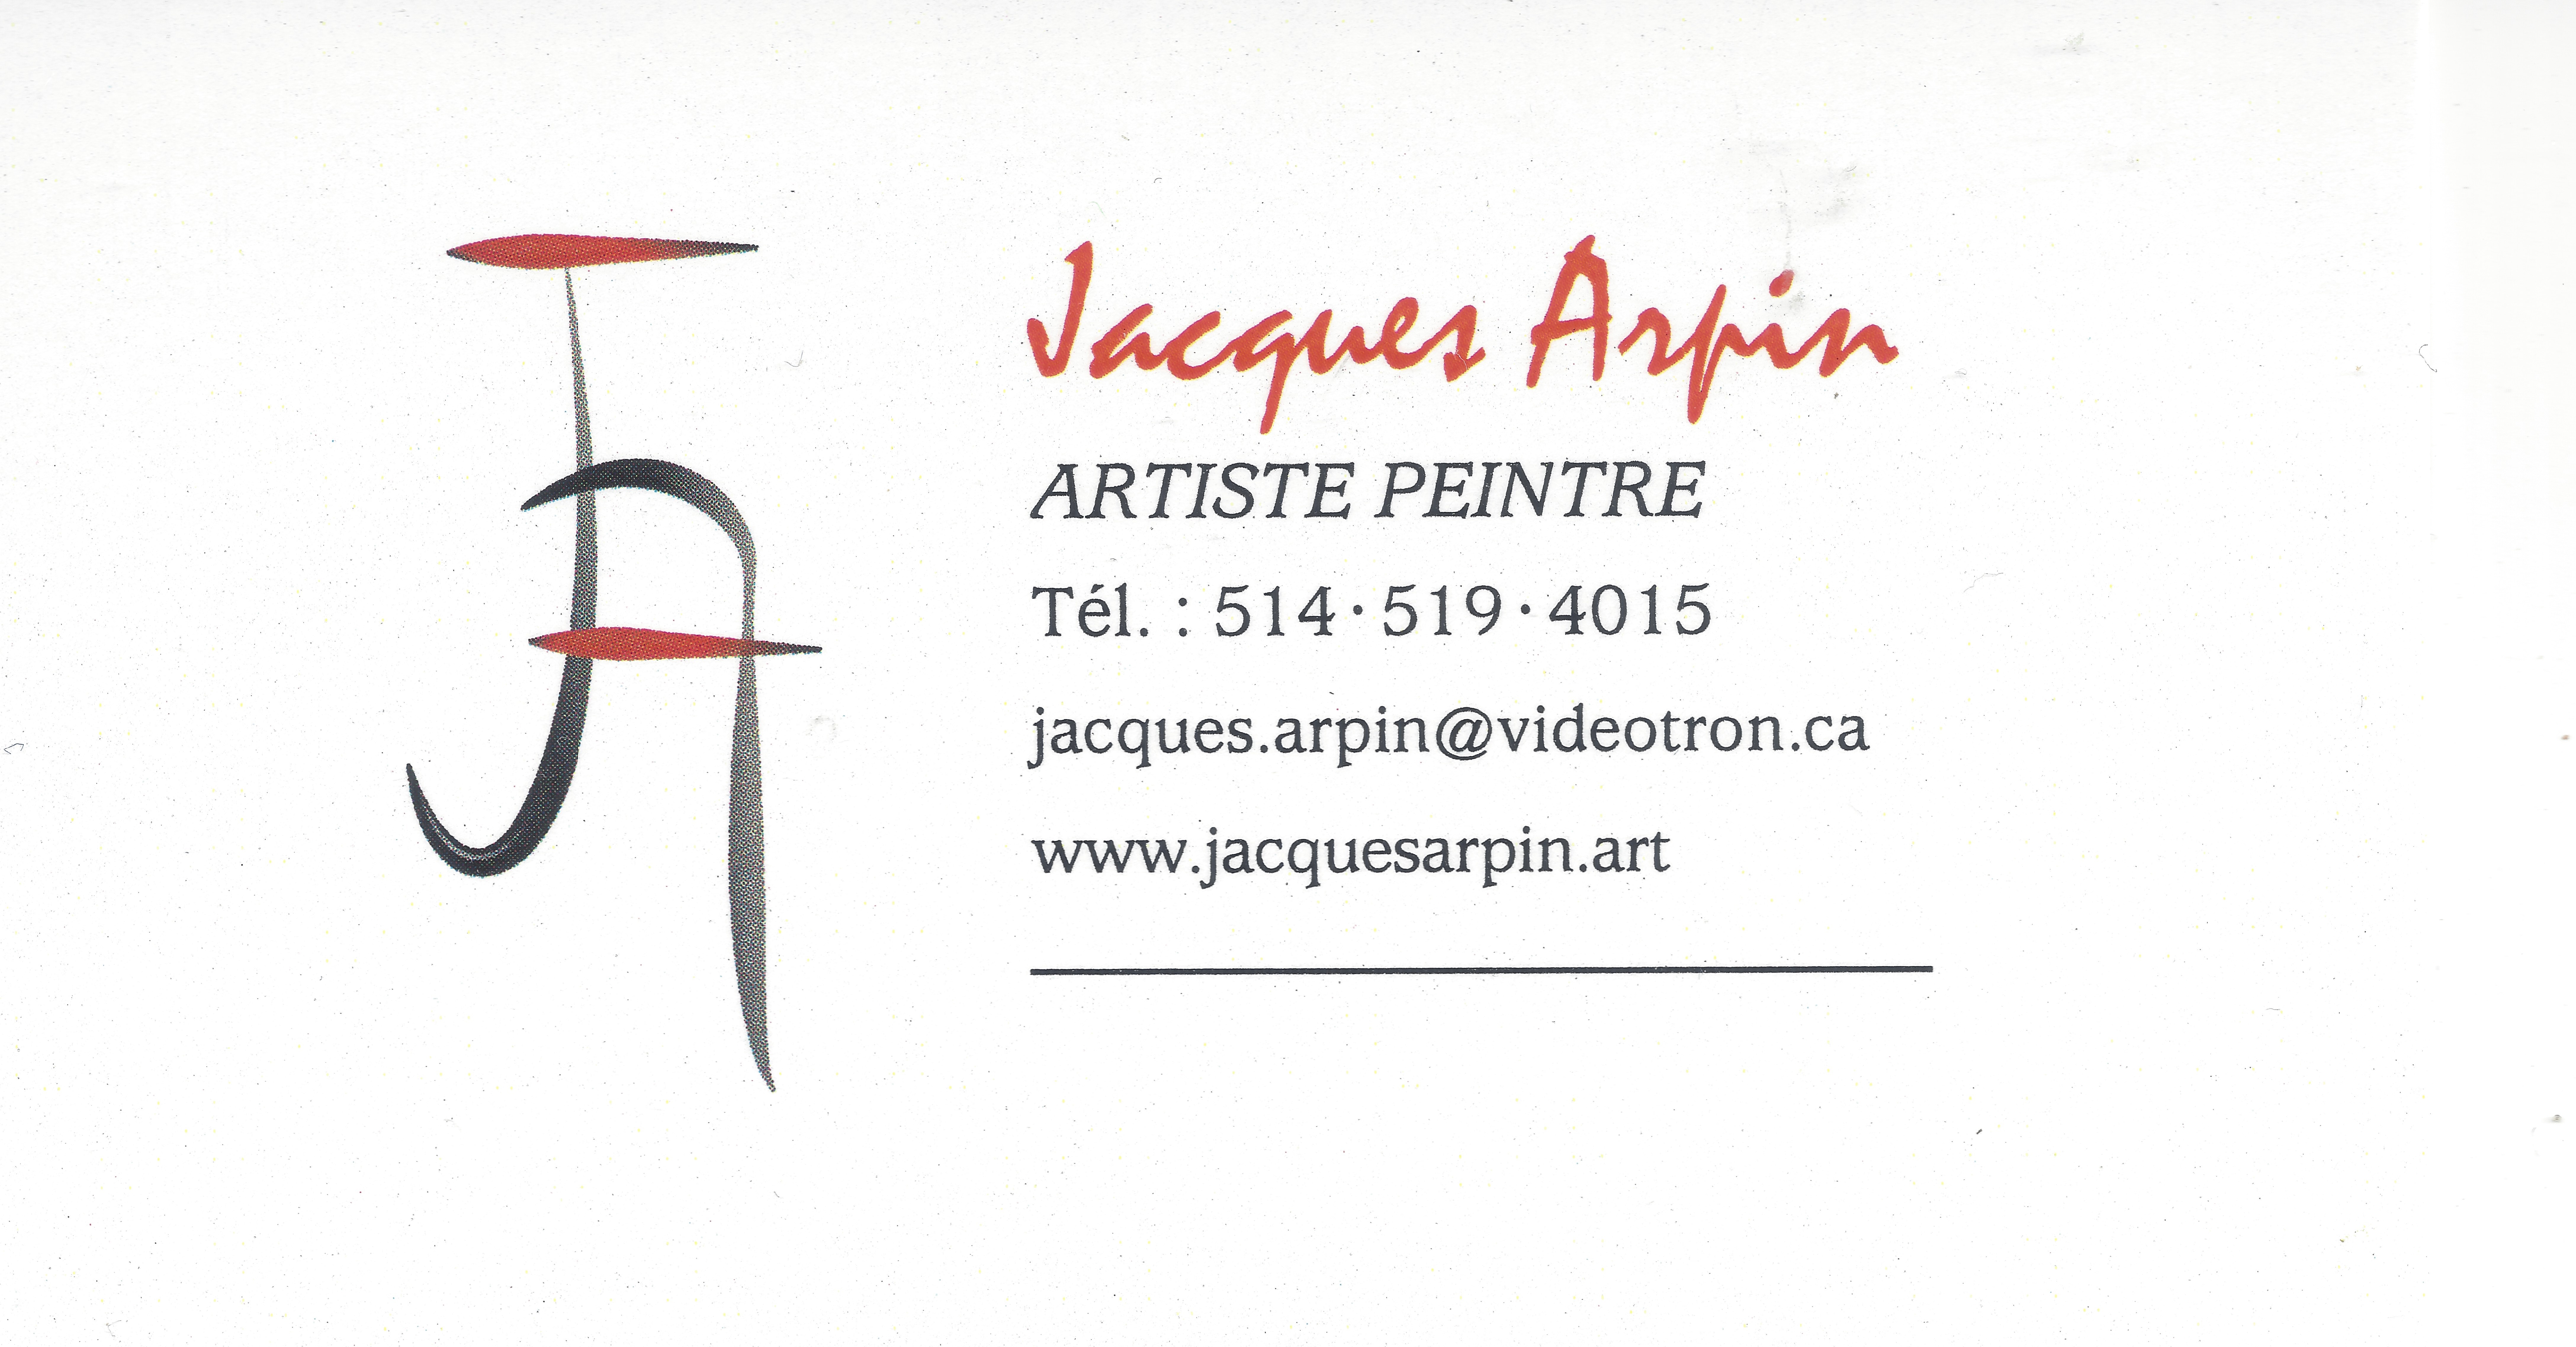 Jacques Arpin